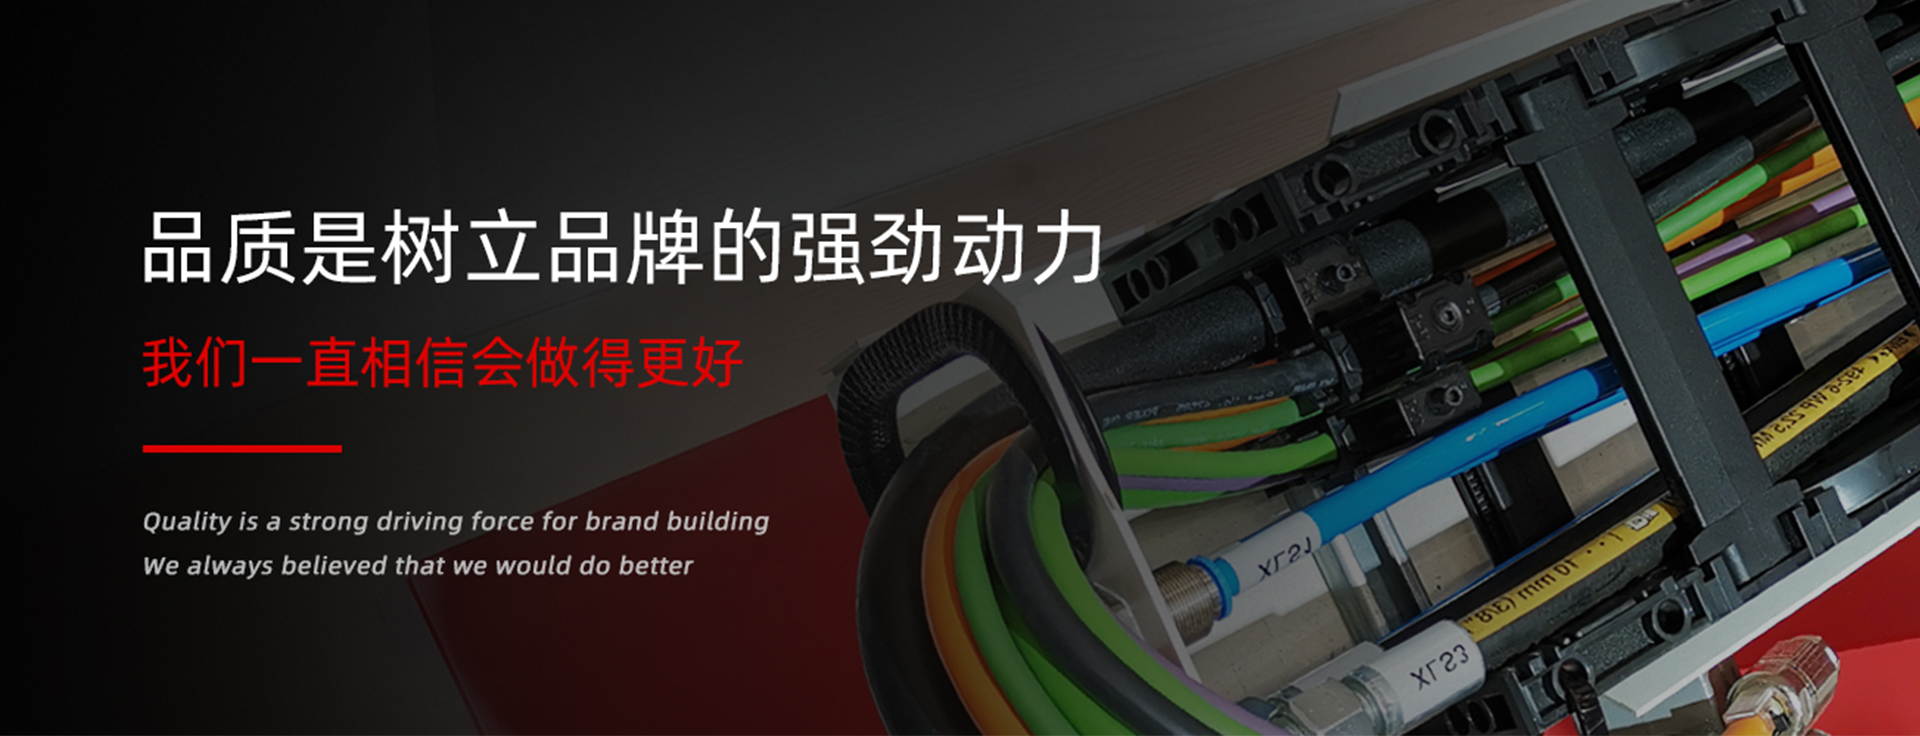 nba中国官方网站机械